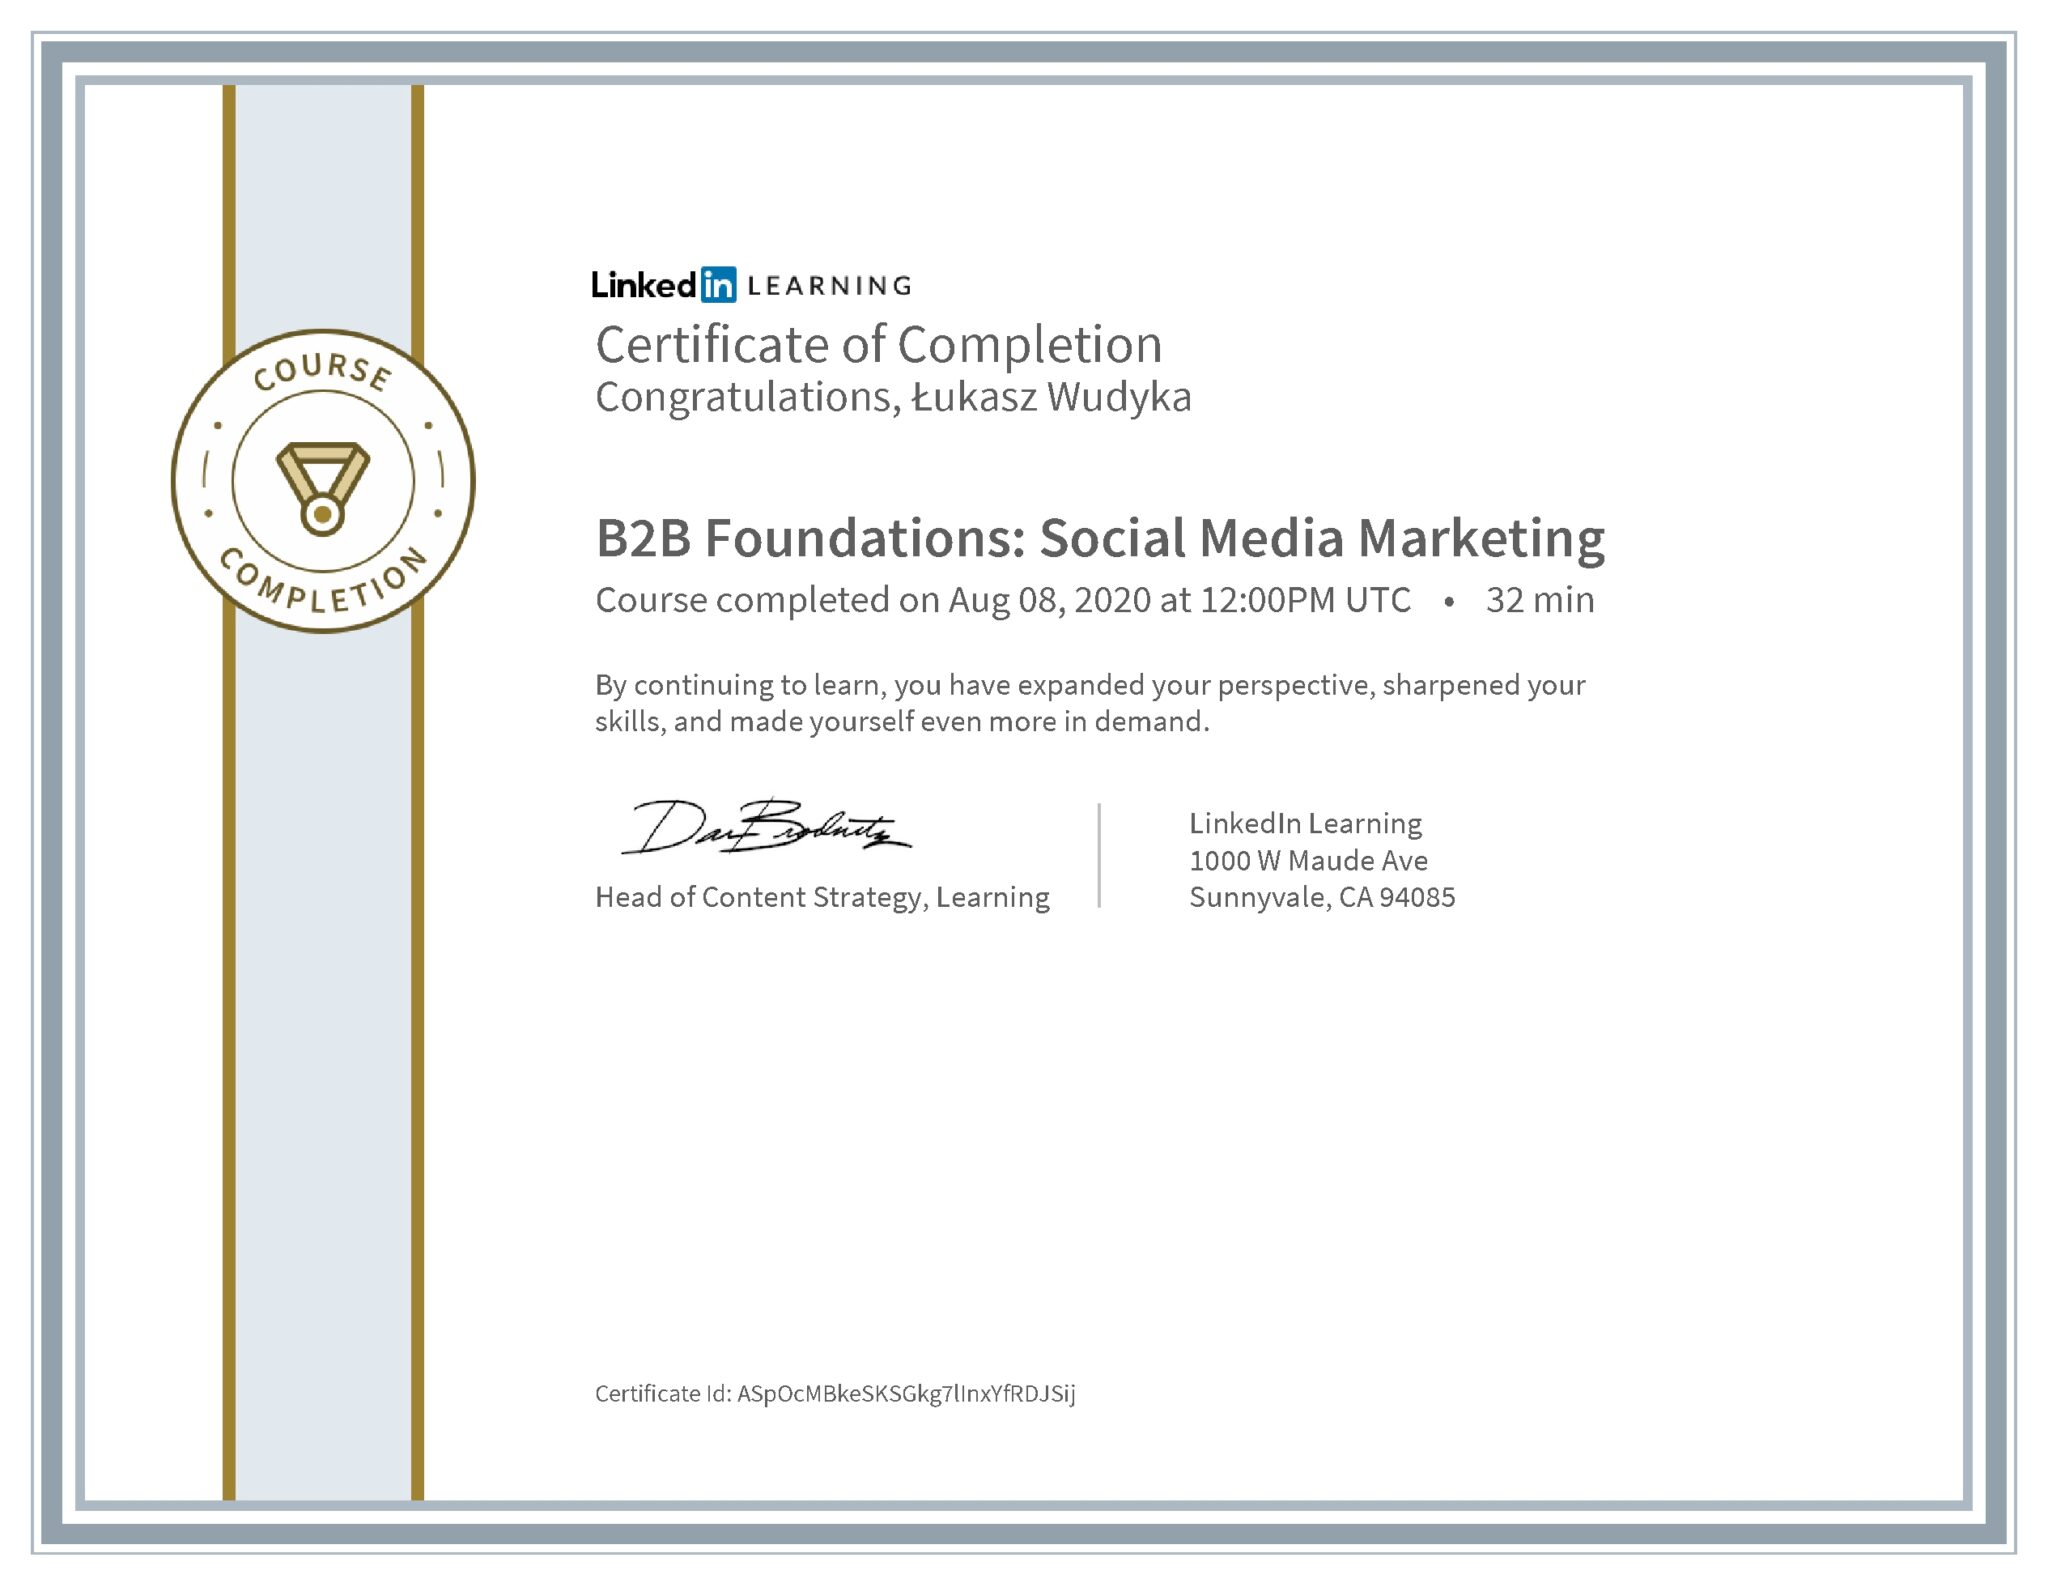 Łukasz Wudyka certyfikat LinkedIn B2B Foundations: Social Media Marketing